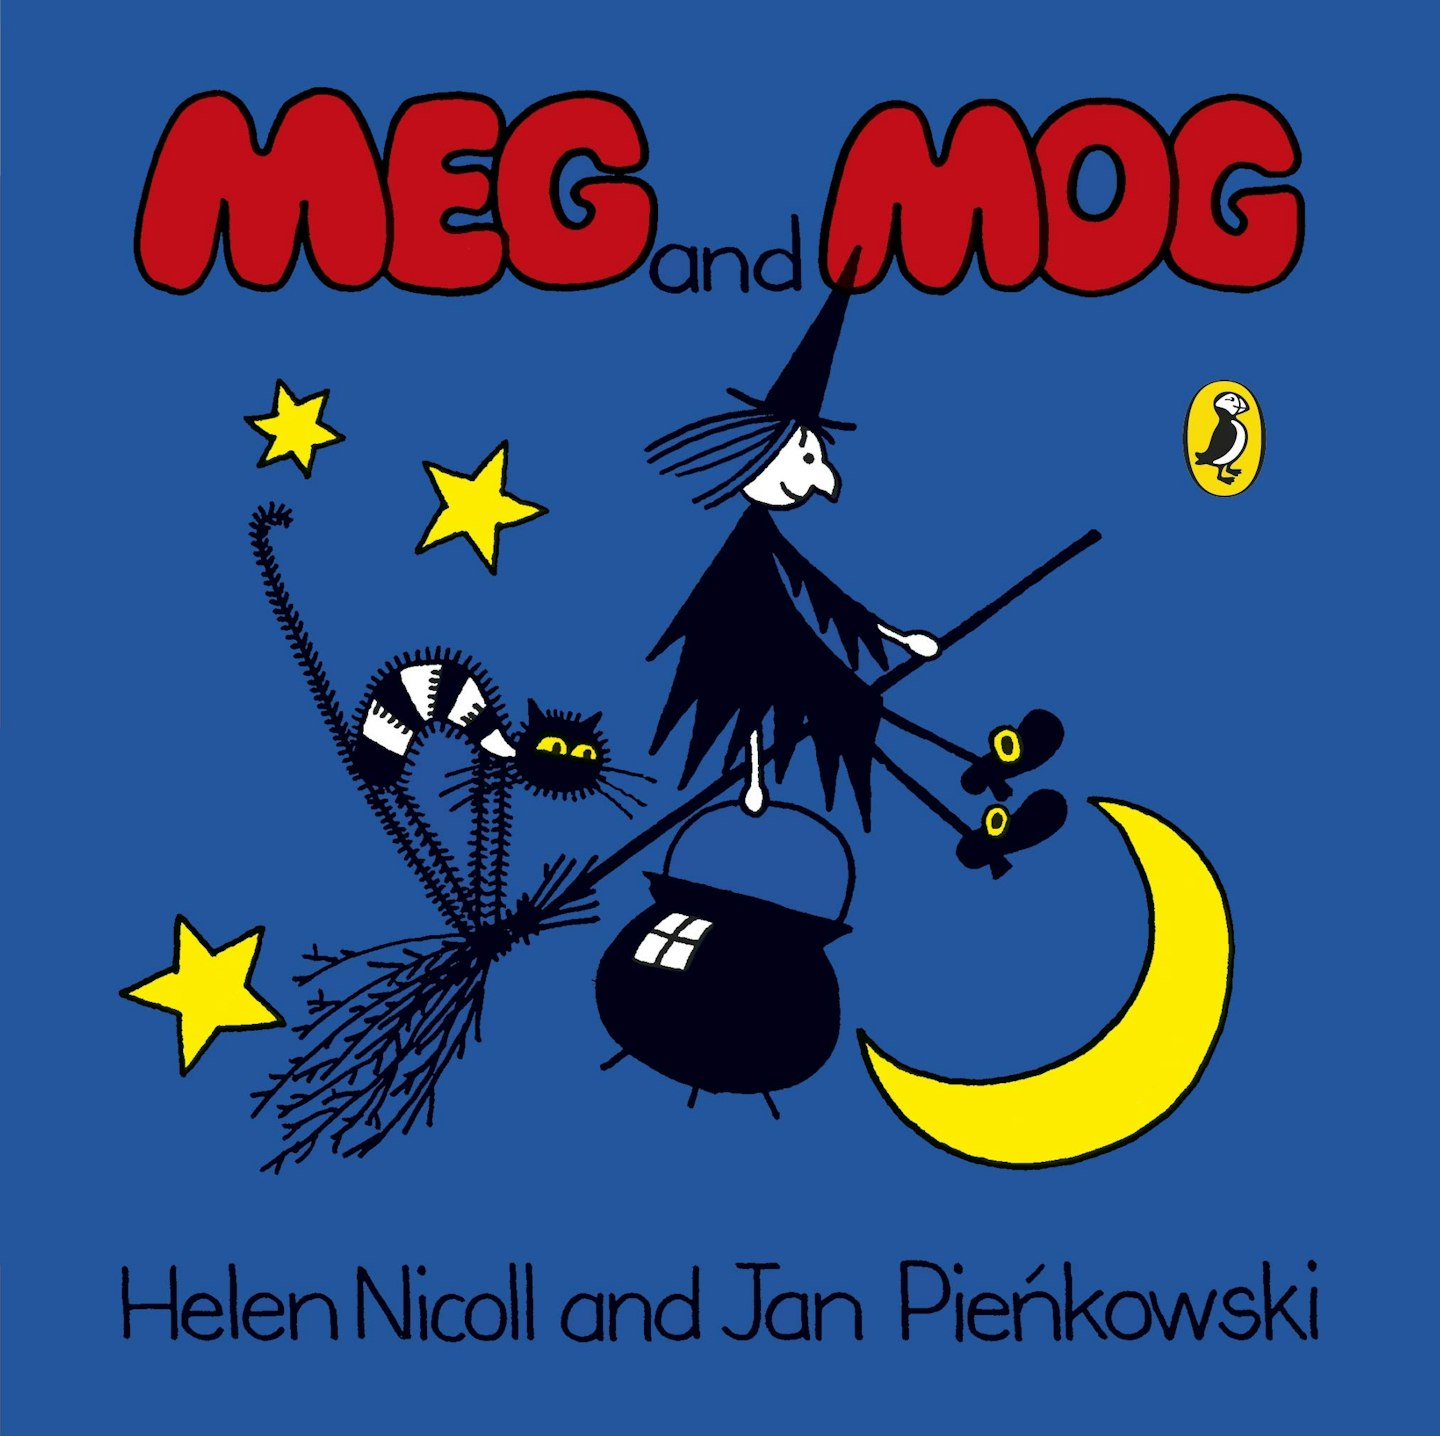 Meg and Mog by Helen Nicoll and Jan Pienkowski